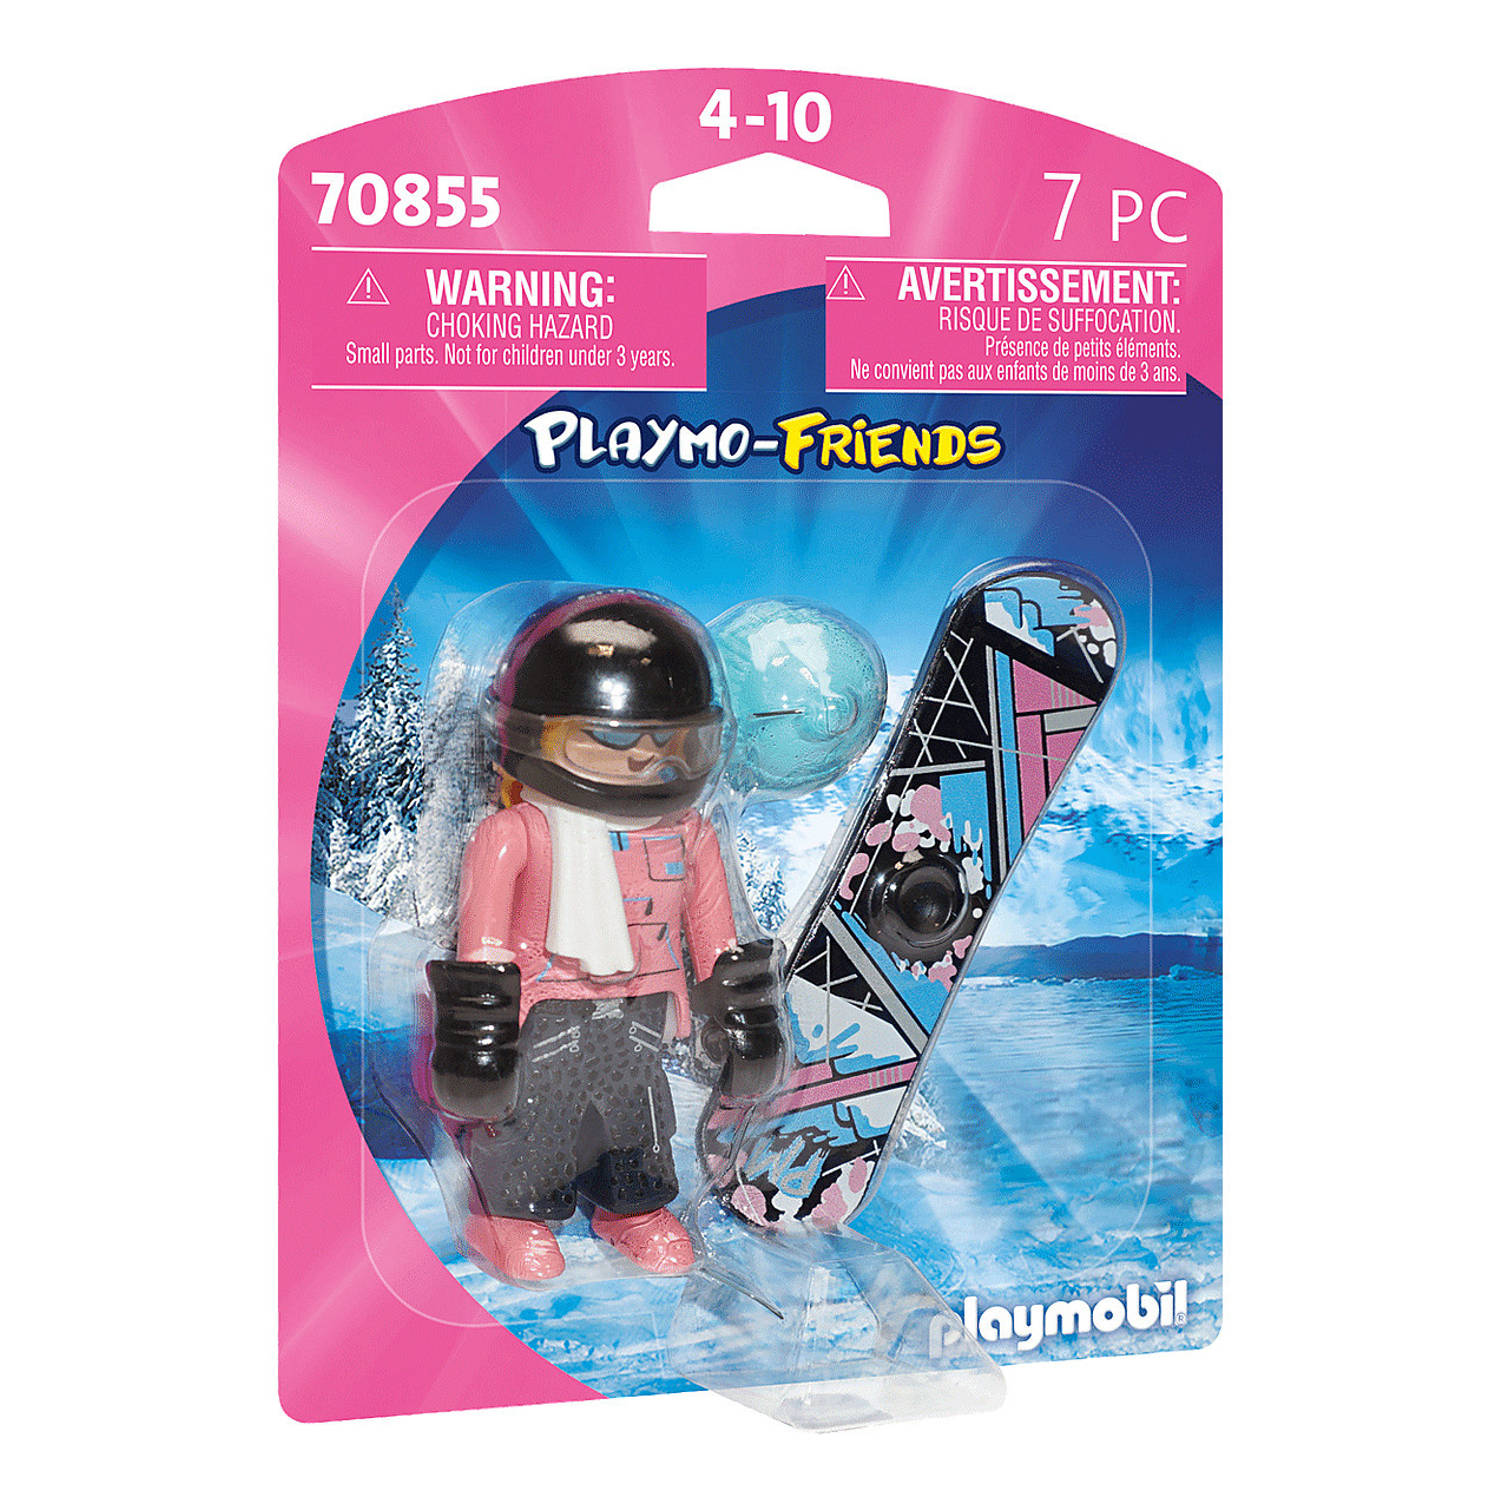 PLAYMOBIL Playmo-Friends - Snowboardster (70855)